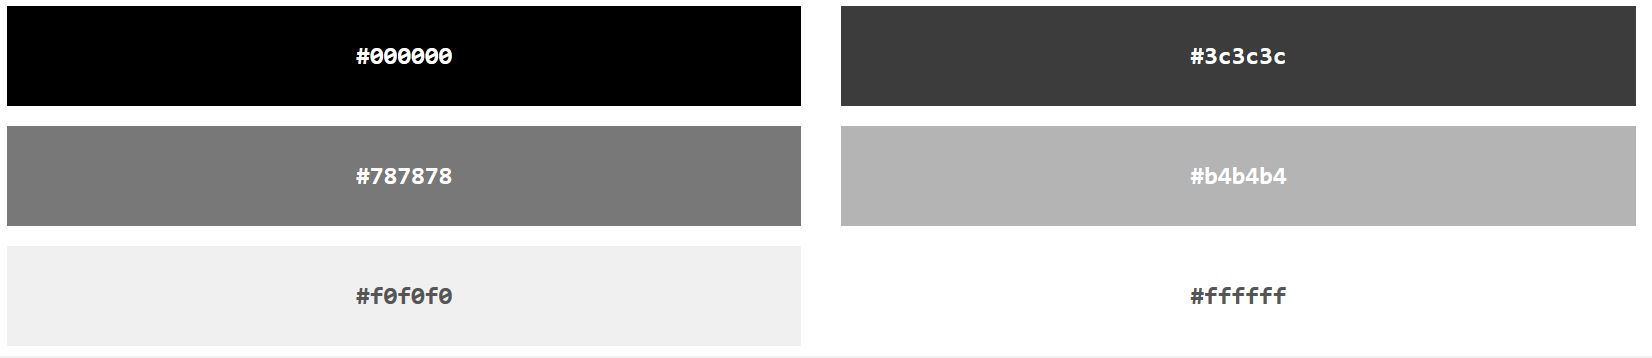 Черный rgb код. Серый цвет RGB. Тёмно серый цвет RGB. Серый РГБ. Красивый серый цвет код.